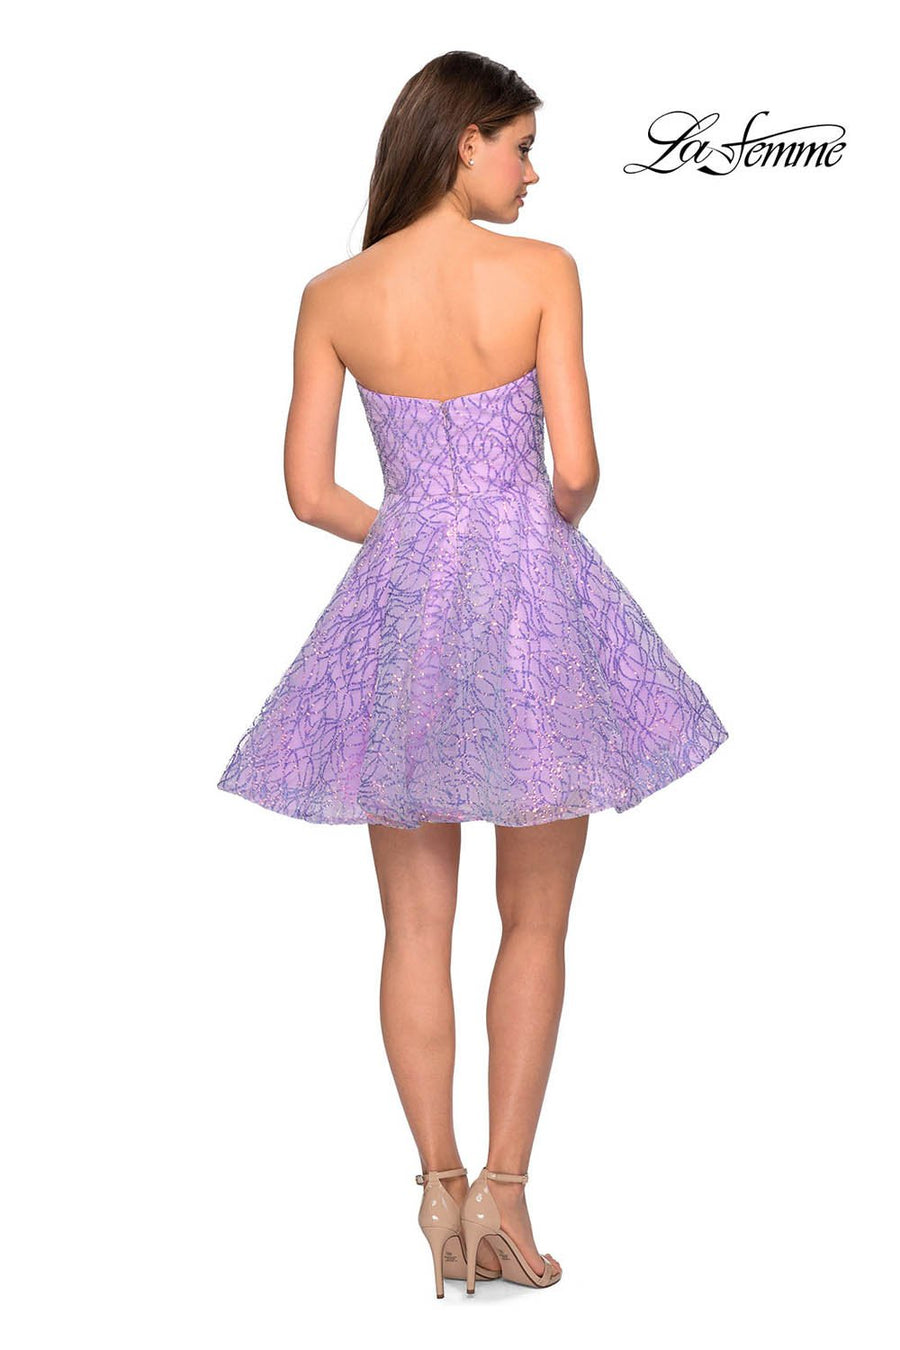 La Femme 27517 prom dress images.  La Femme 27517 is available in these colors: Black, Blush, Lavender.